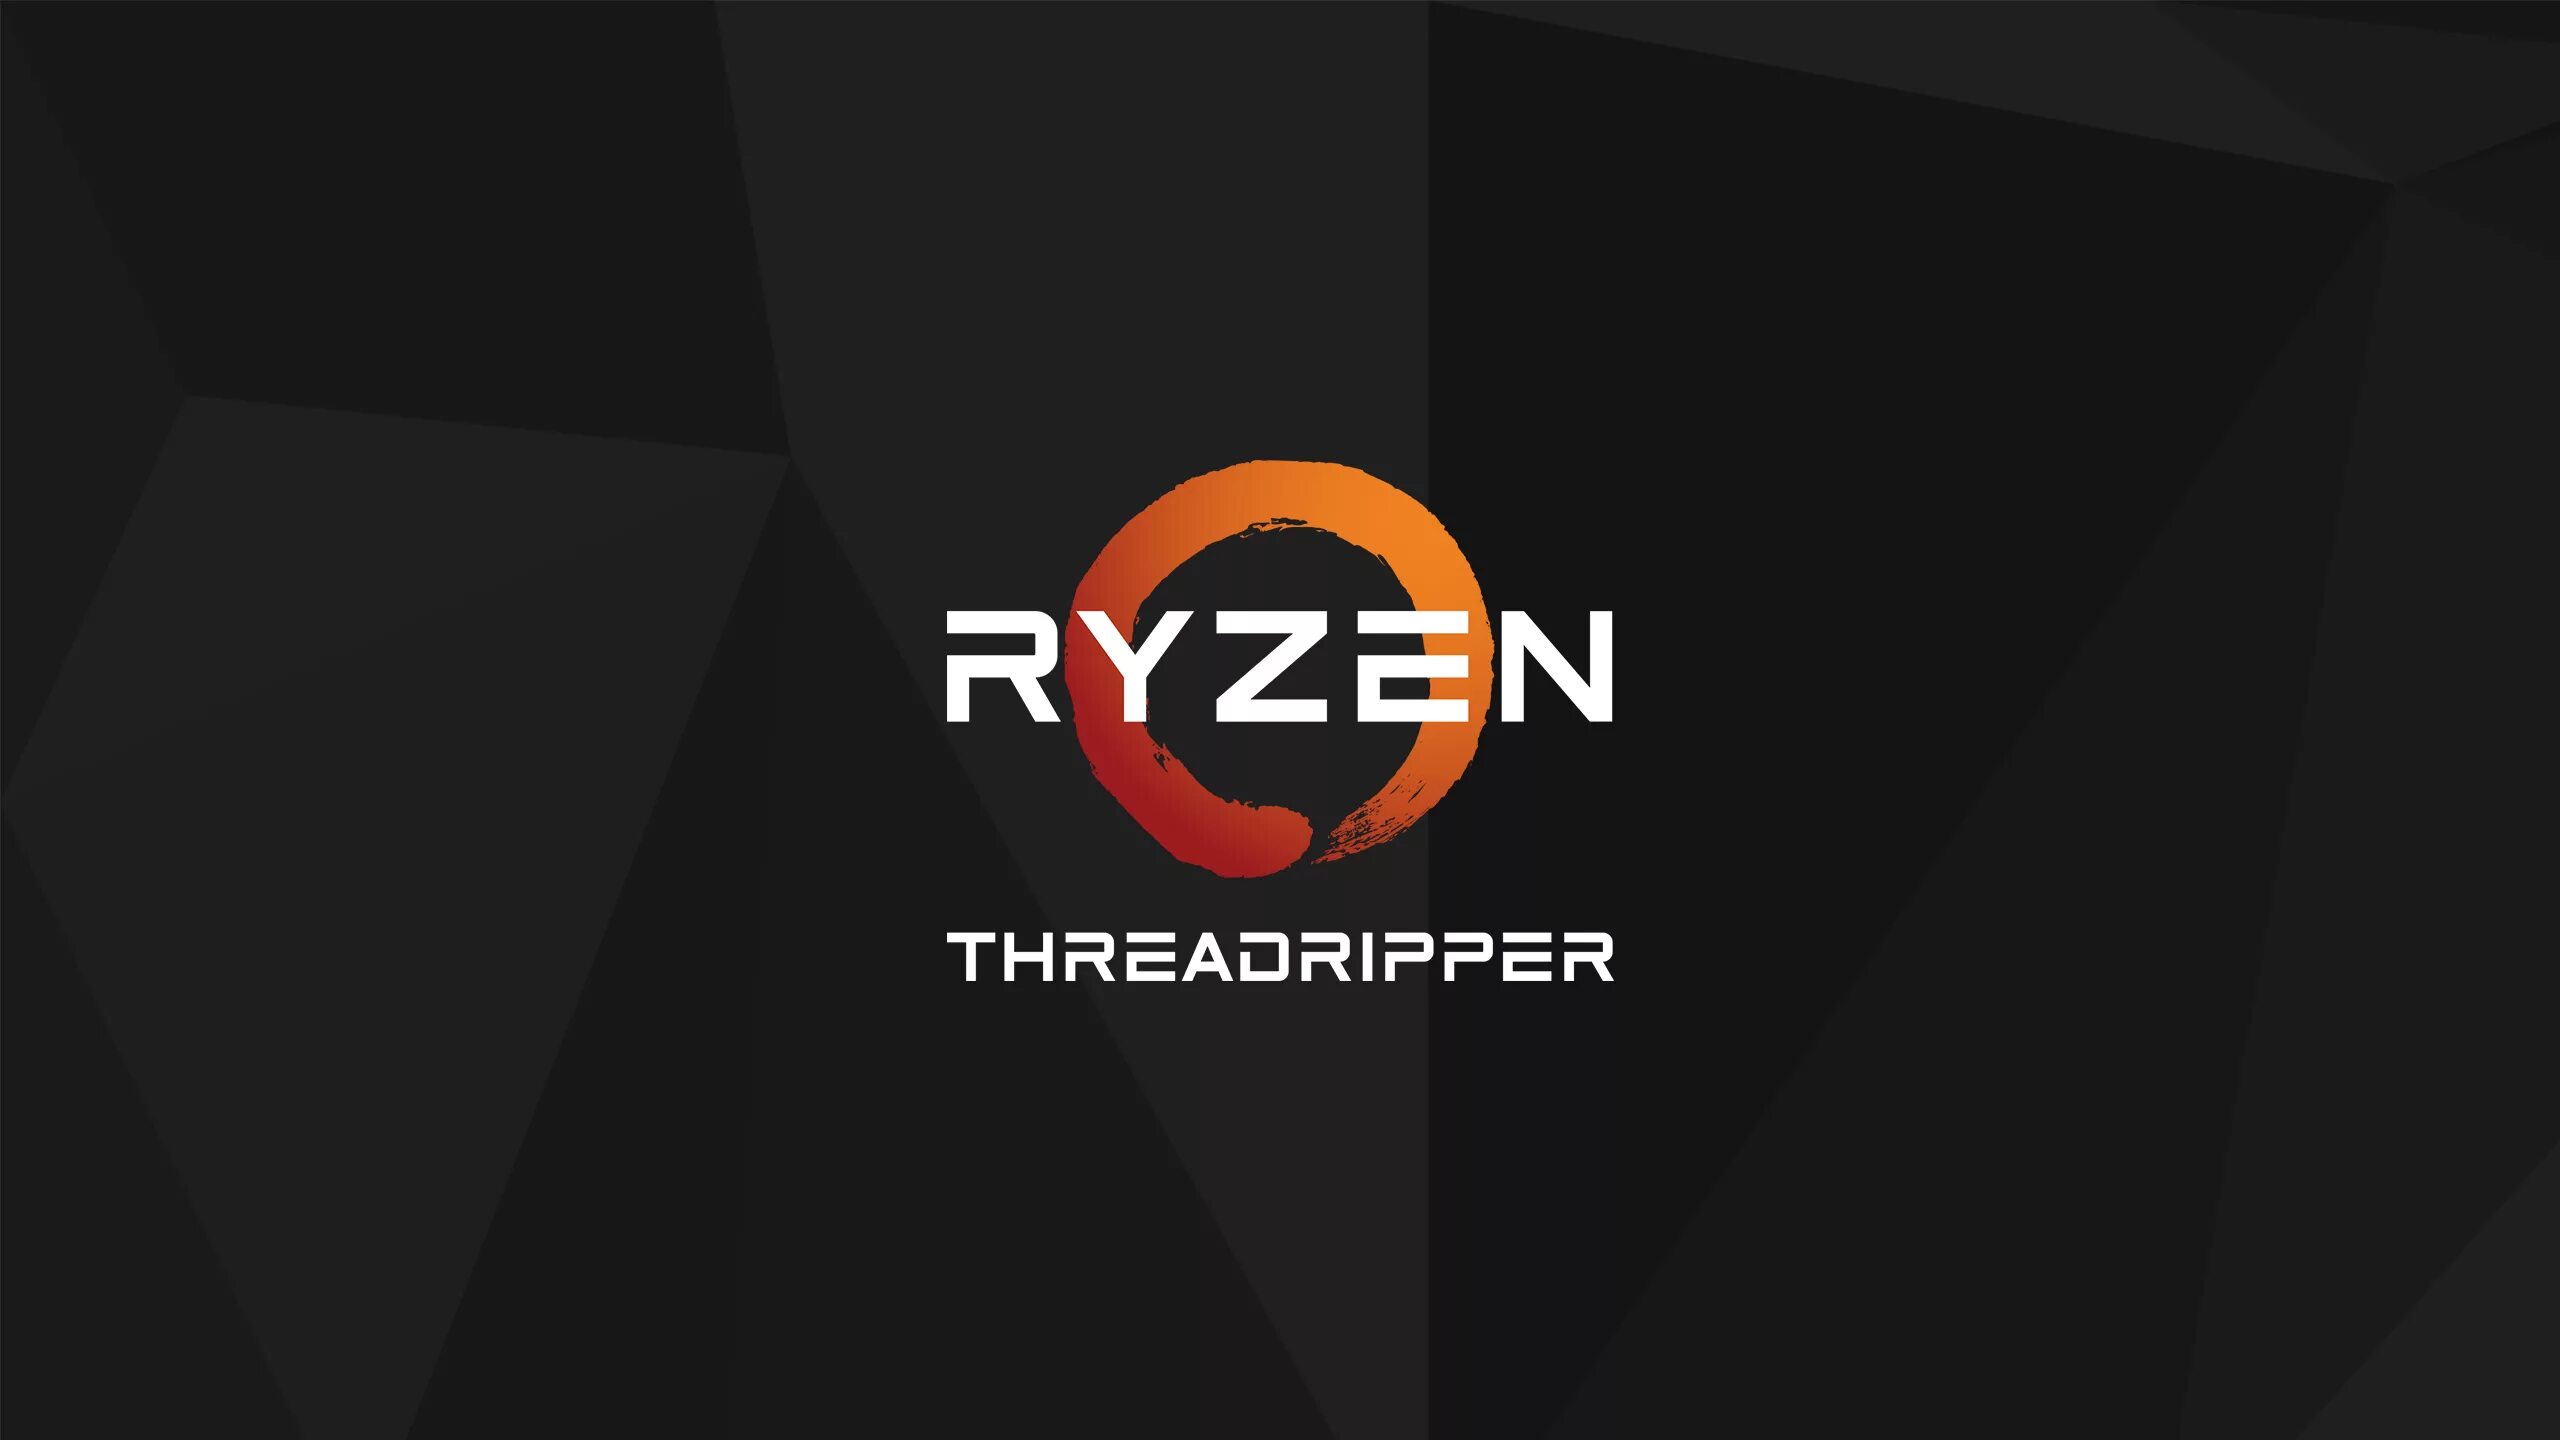 Ryzen 1920x1080. Заставка Ryzen. Картинки AMD Ryzen. Заставка AMD Ryzen. Обои Threadripper.